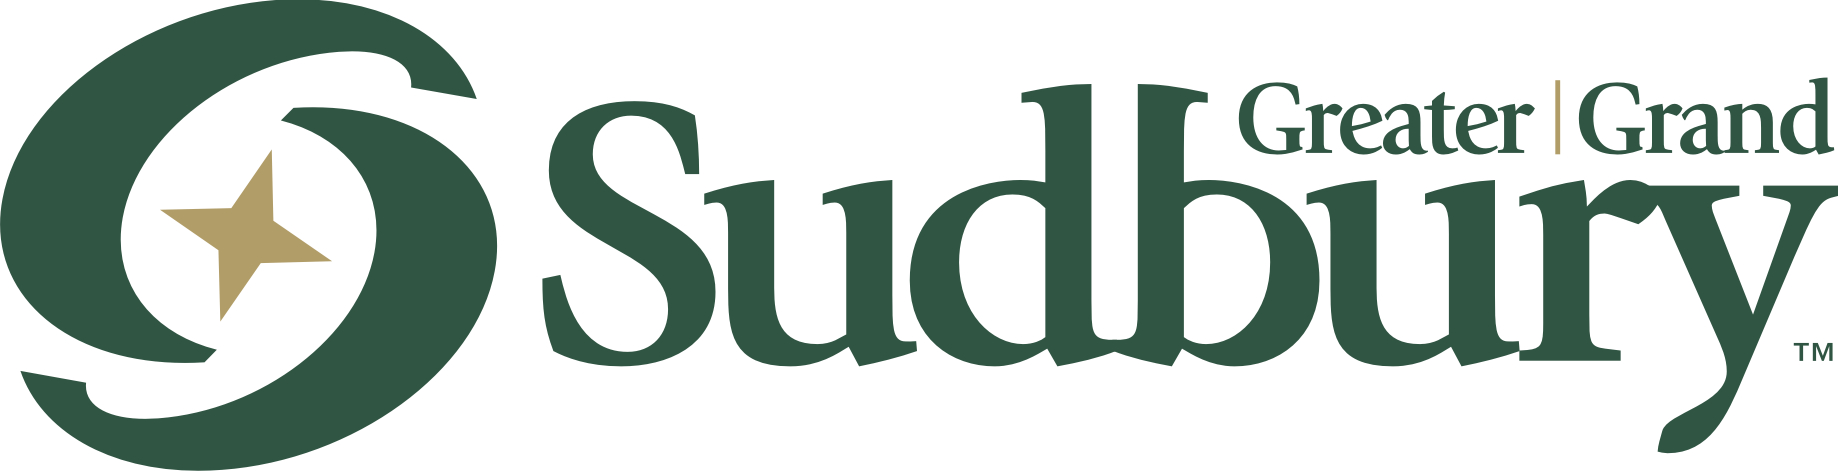 City of Greater Sudbury Logo